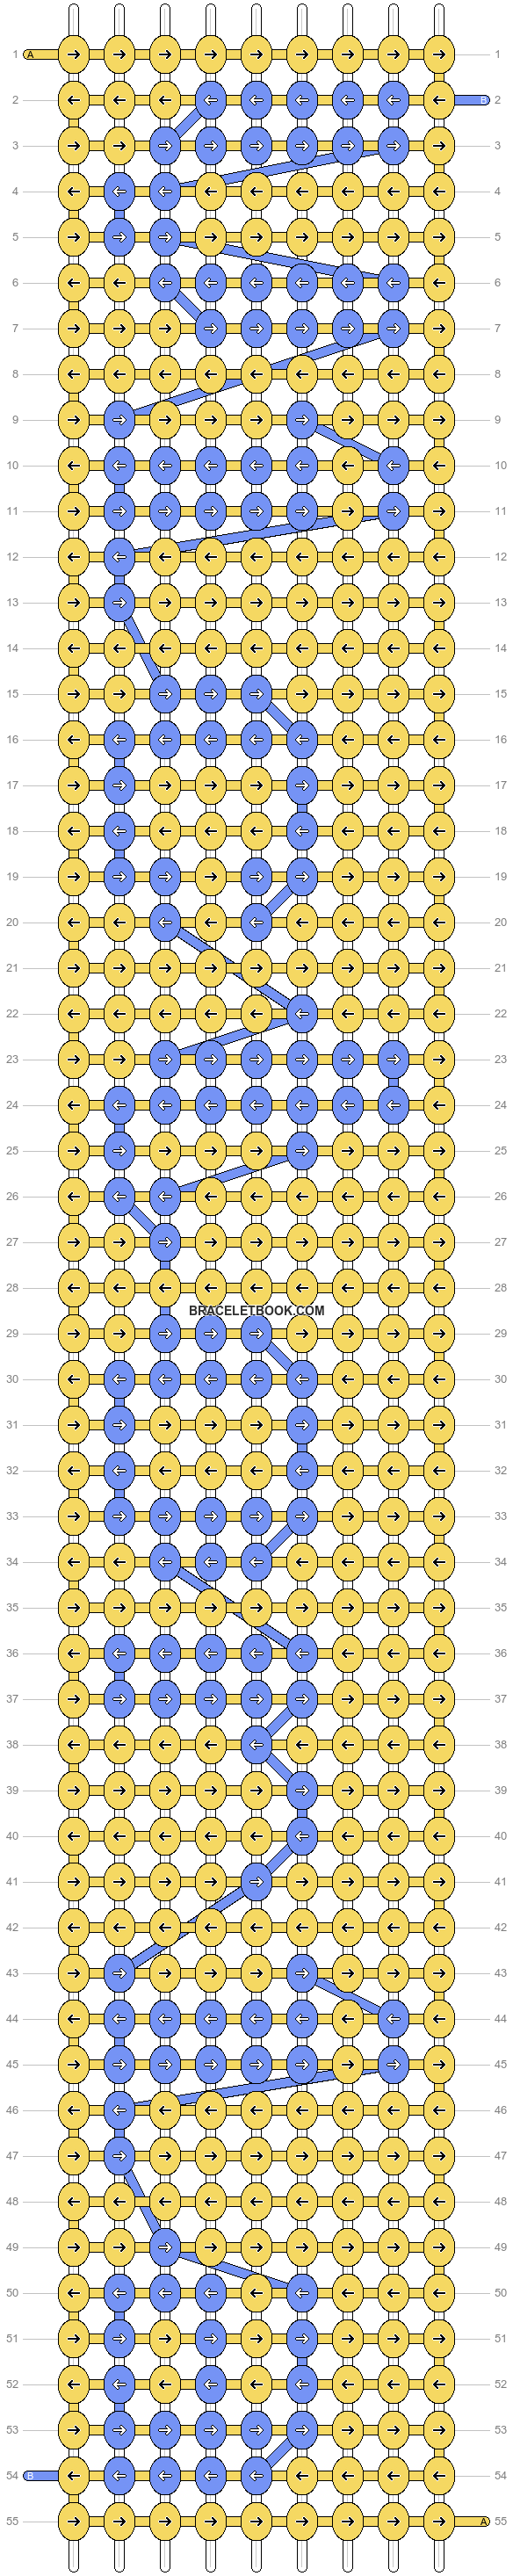 Alpha pattern #7163 variation #43288 pattern